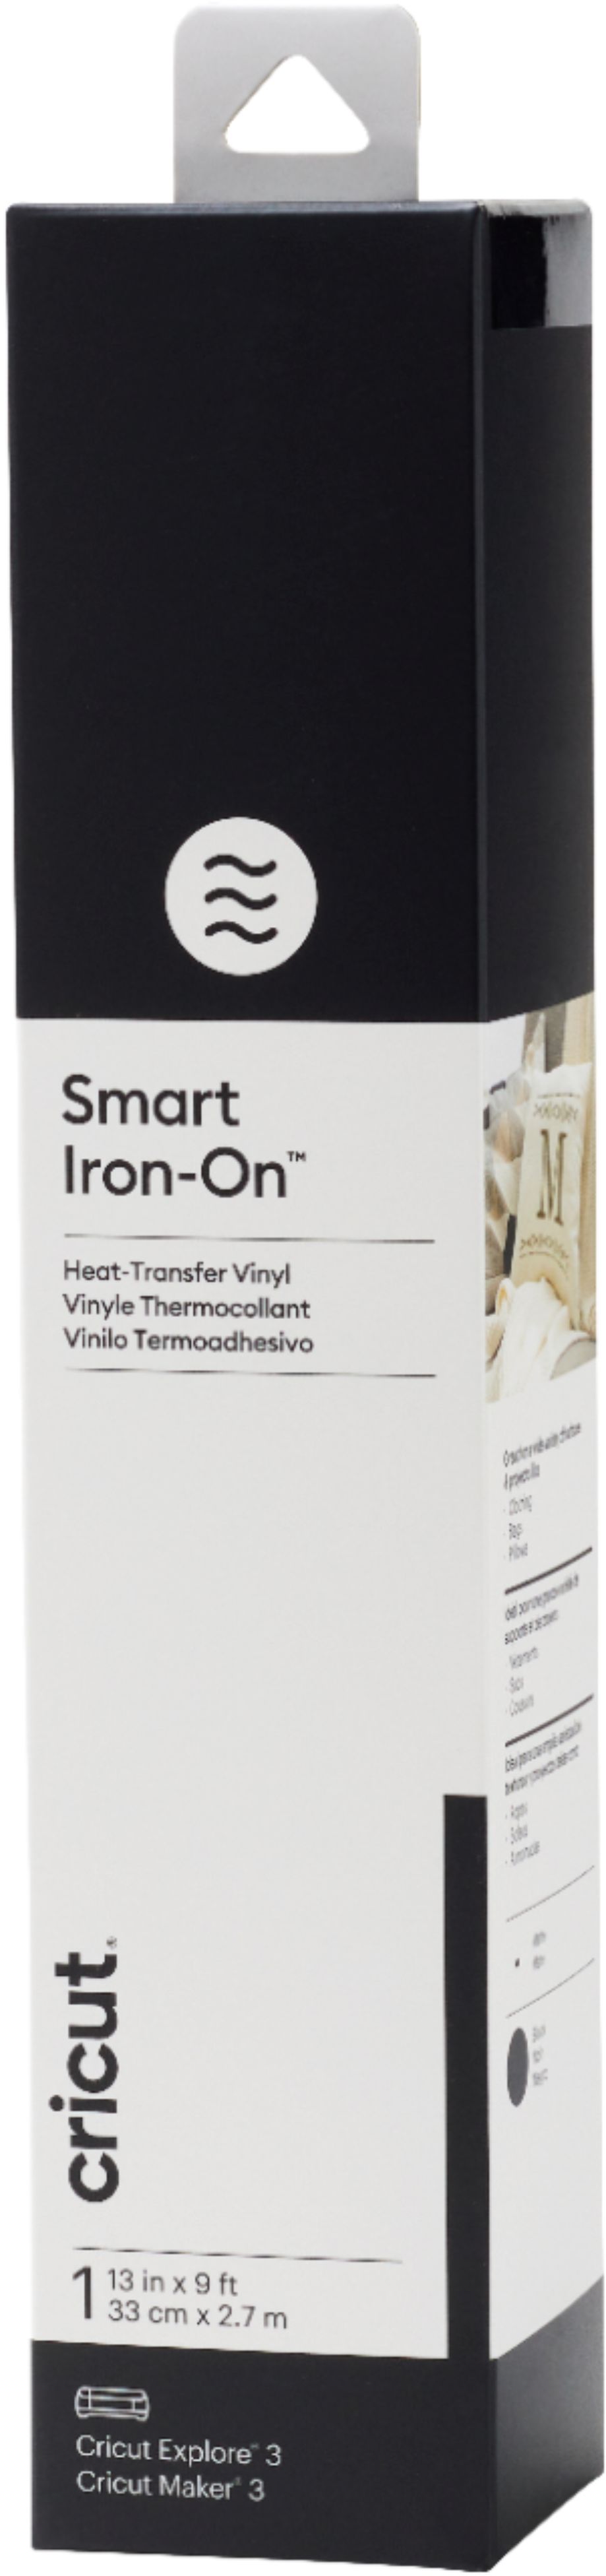 Cricut Smart Iron-On 9 ft 2008492 - Best Buy